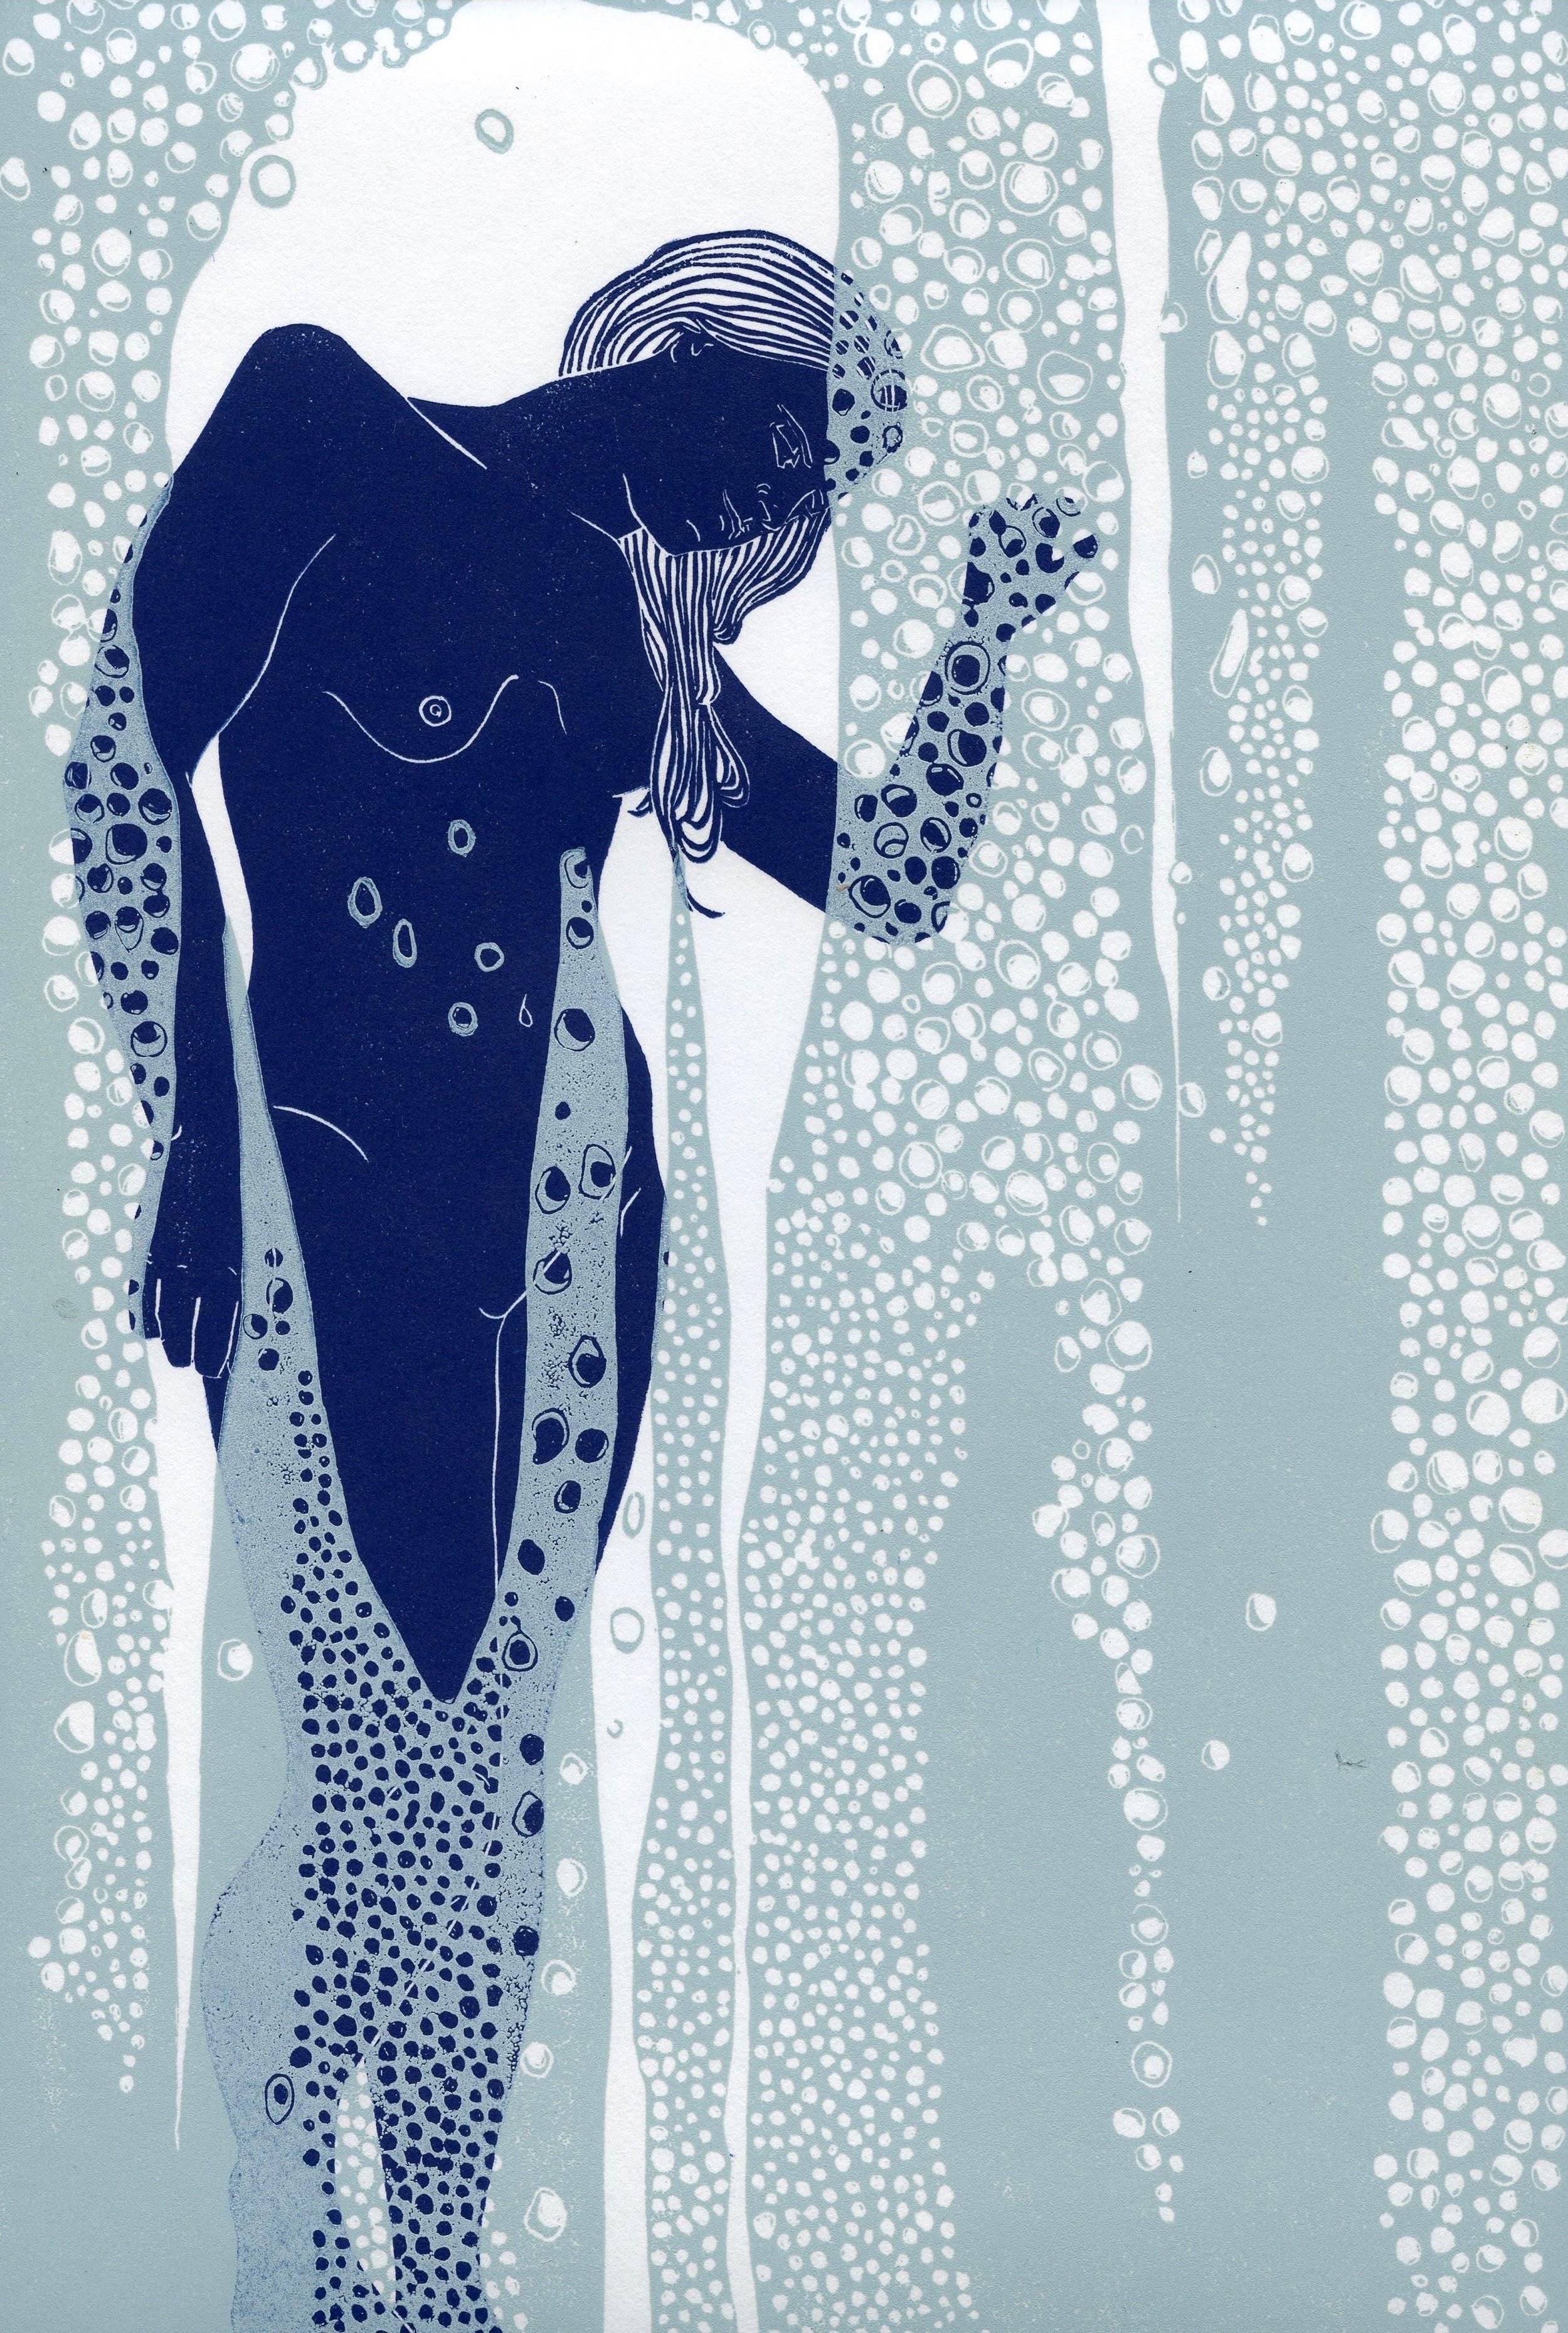 Nude Behind Shower Glass, female figurative Linocut original print, Unframed